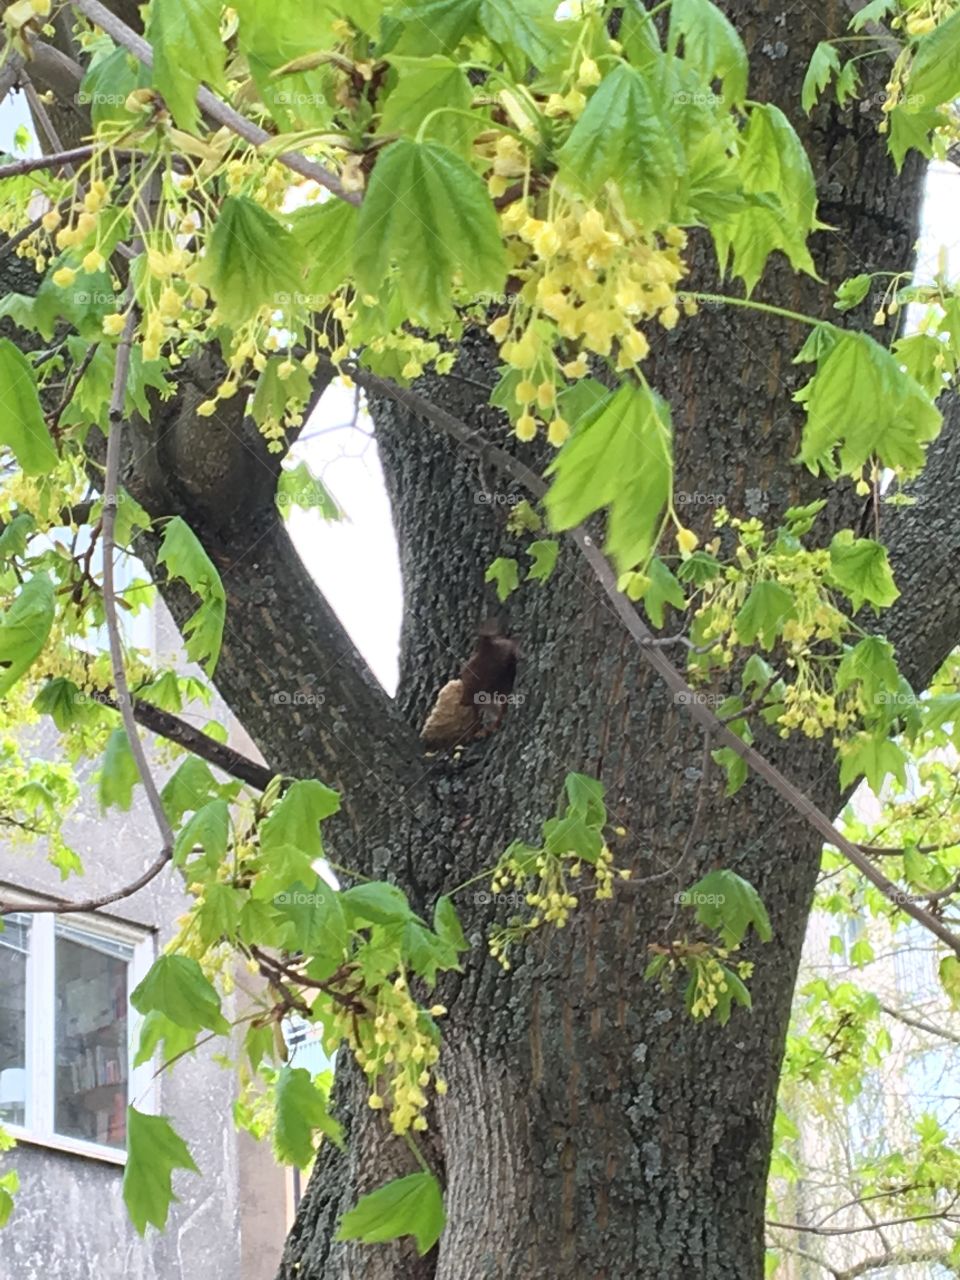 Squirrel eating a sandwich